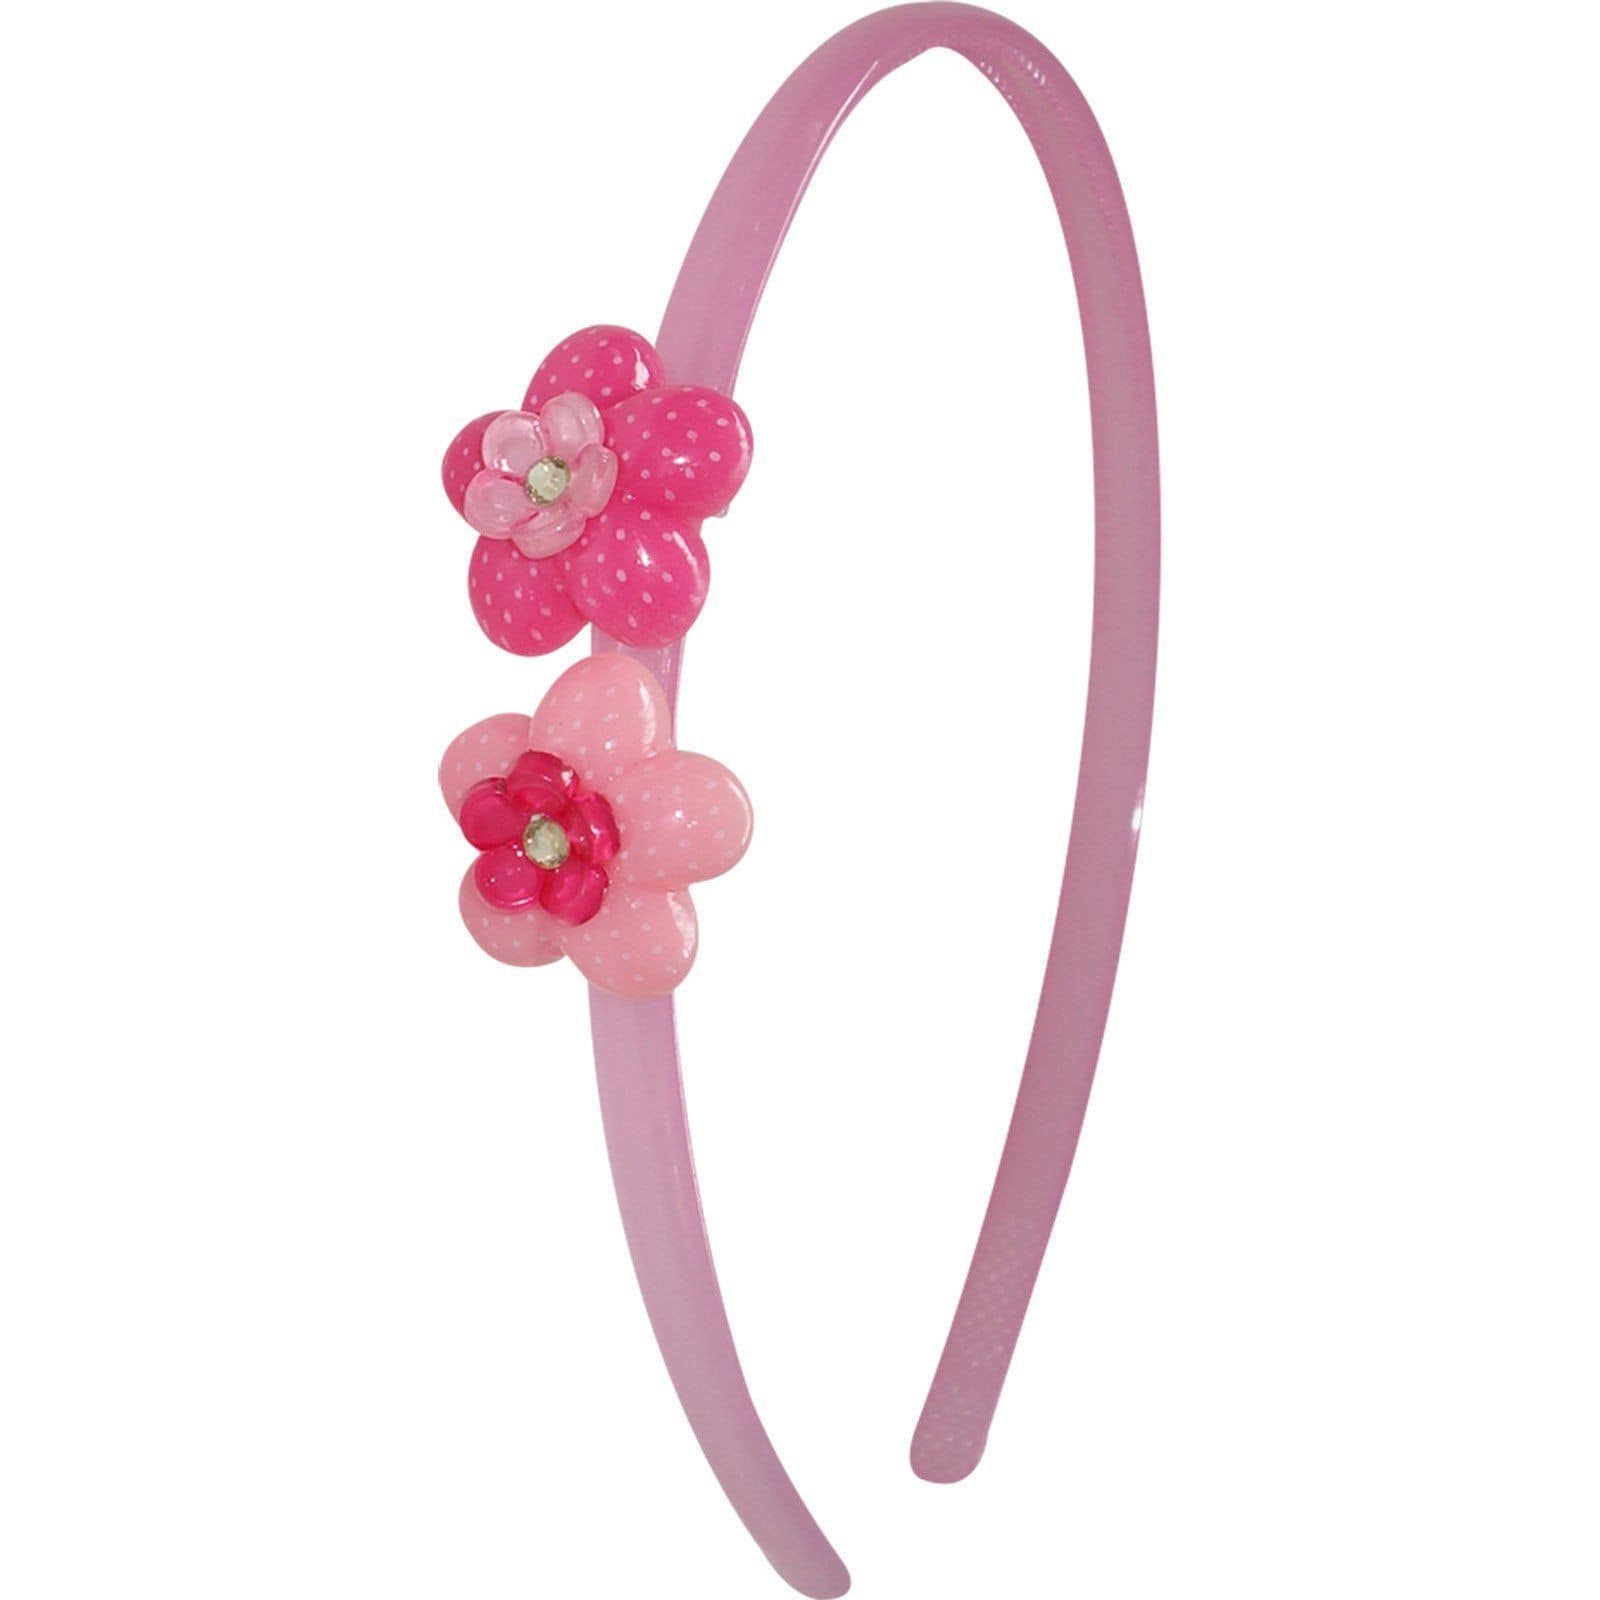 2 X Light Pink Flower Hairbands Headbands Alice Hair Bands Girls Kid Accessories